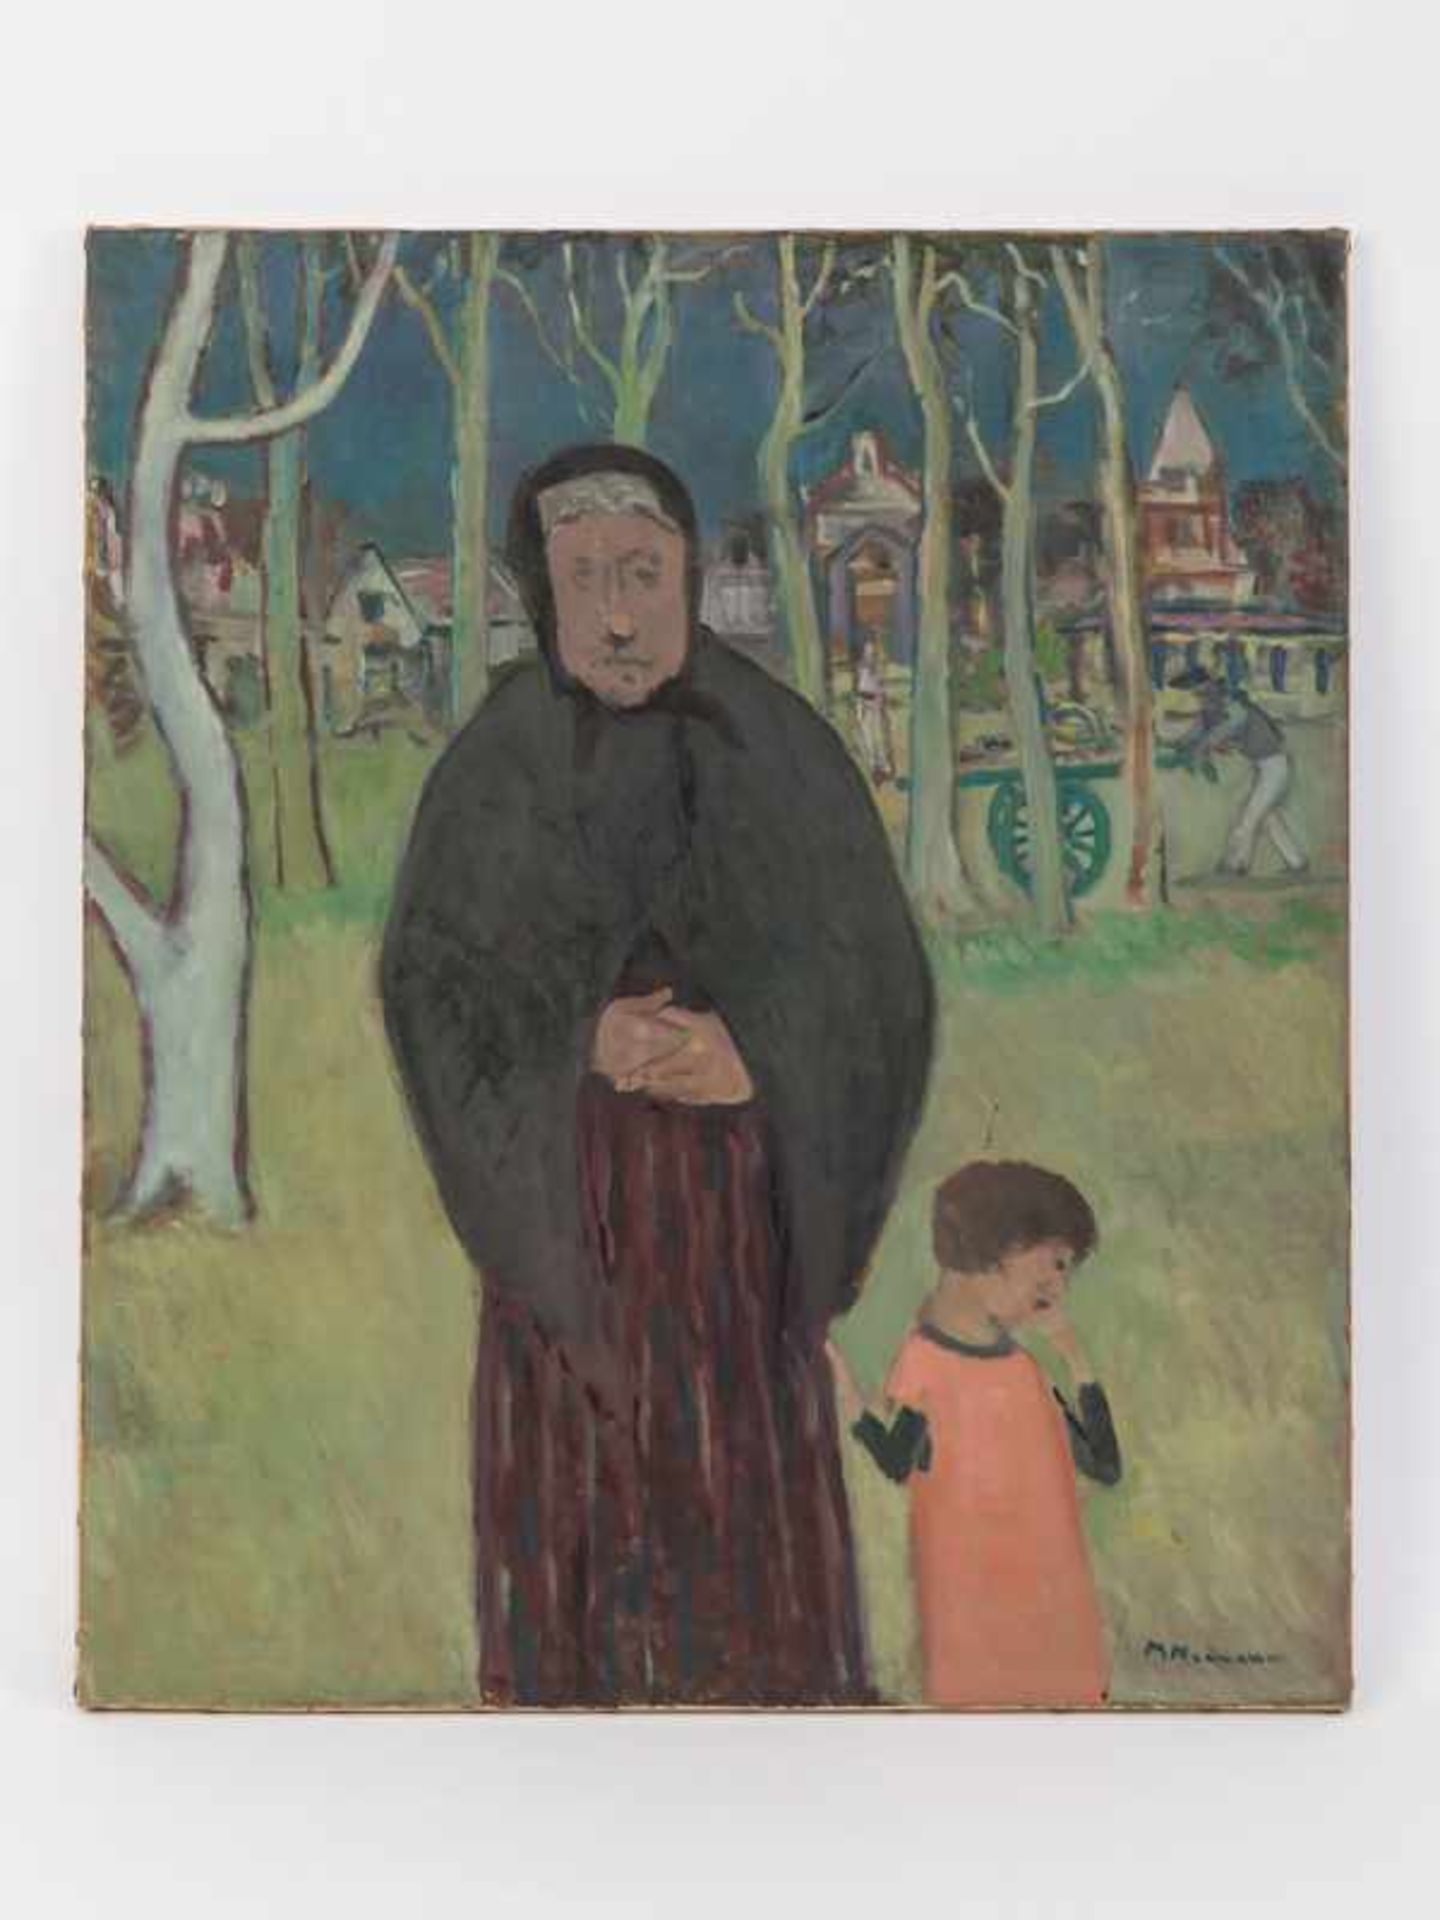 Neumann, Max (1885-1973). "La Vecchia"; Öl auf Leinwand; unten rechts signiert; ungerahmt; Maße